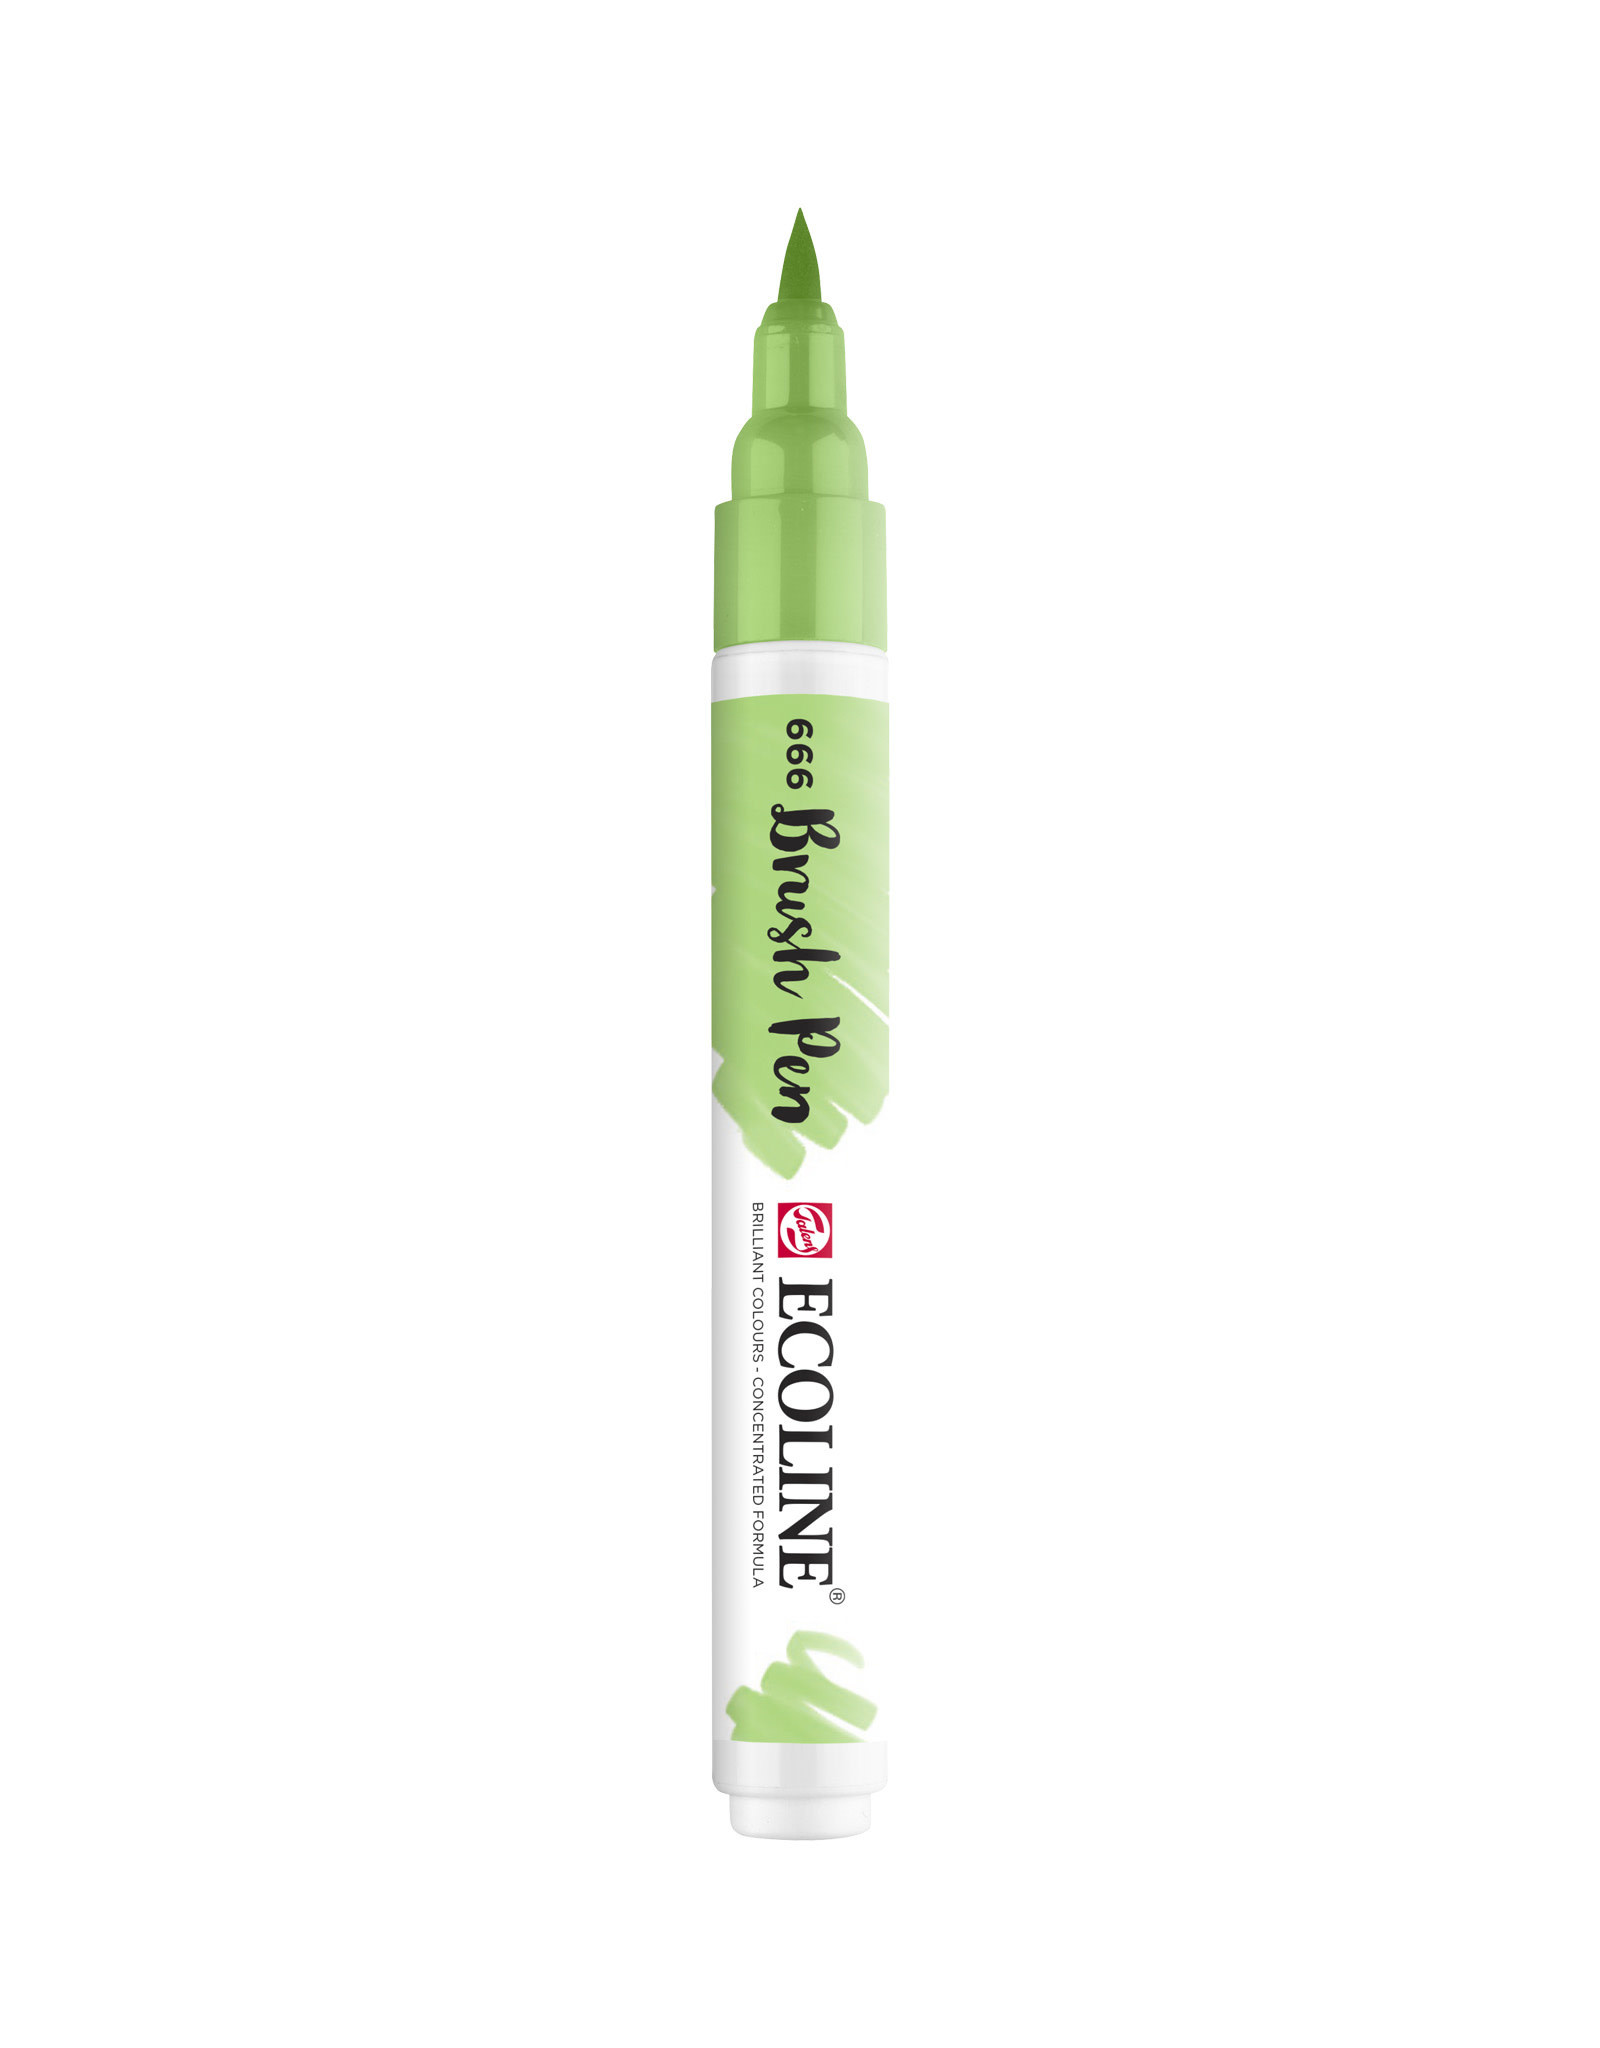 Royal Talens Ecoline Watercolour Brush Pen, Pastel Green